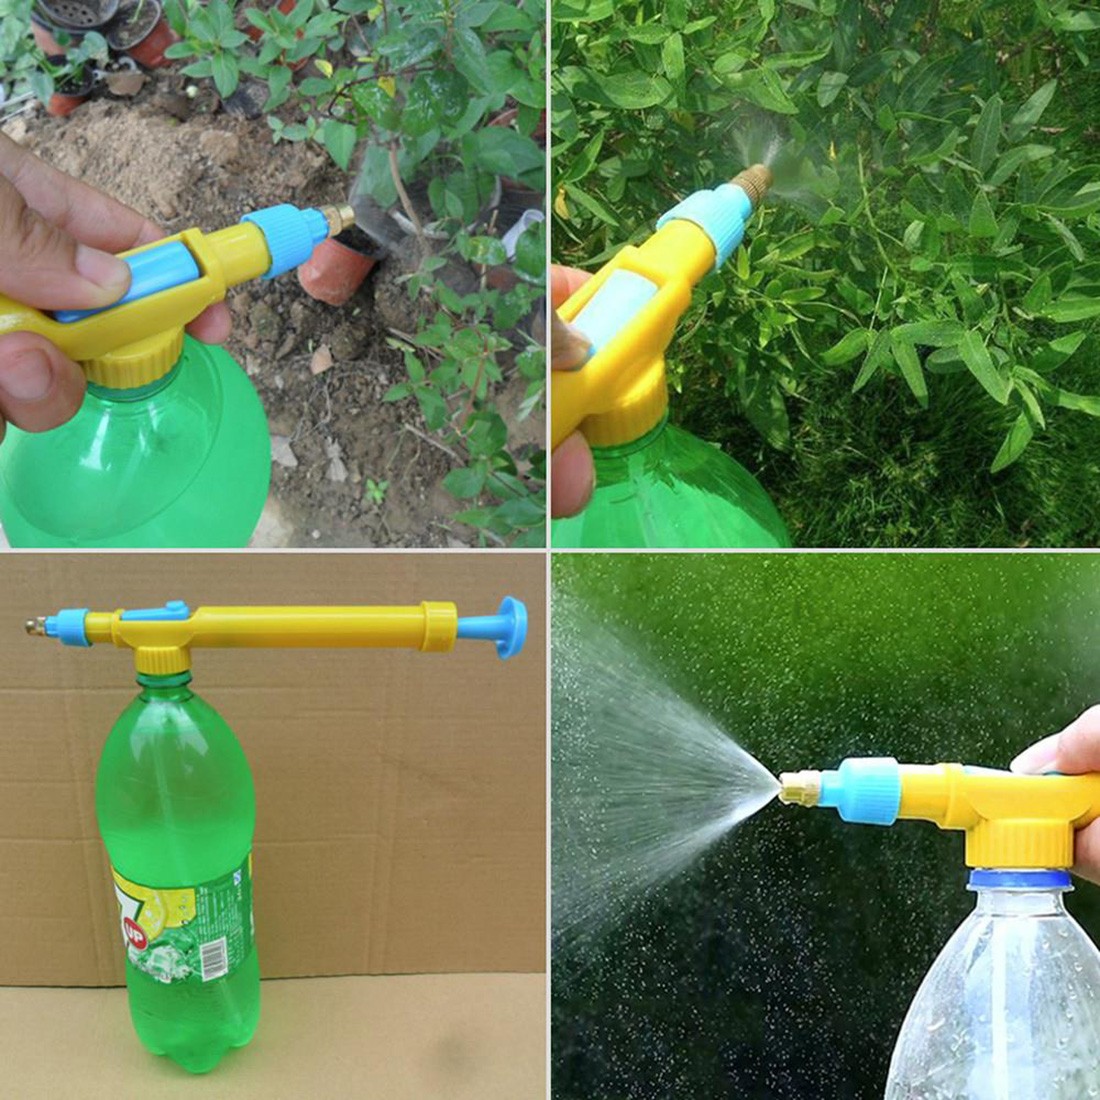 Mini Juice Bottles Interface Plastic Trolley Gun Sprayer Head Water Pressure Sprayer For Garden Bonsai Water Pesticide Spraying